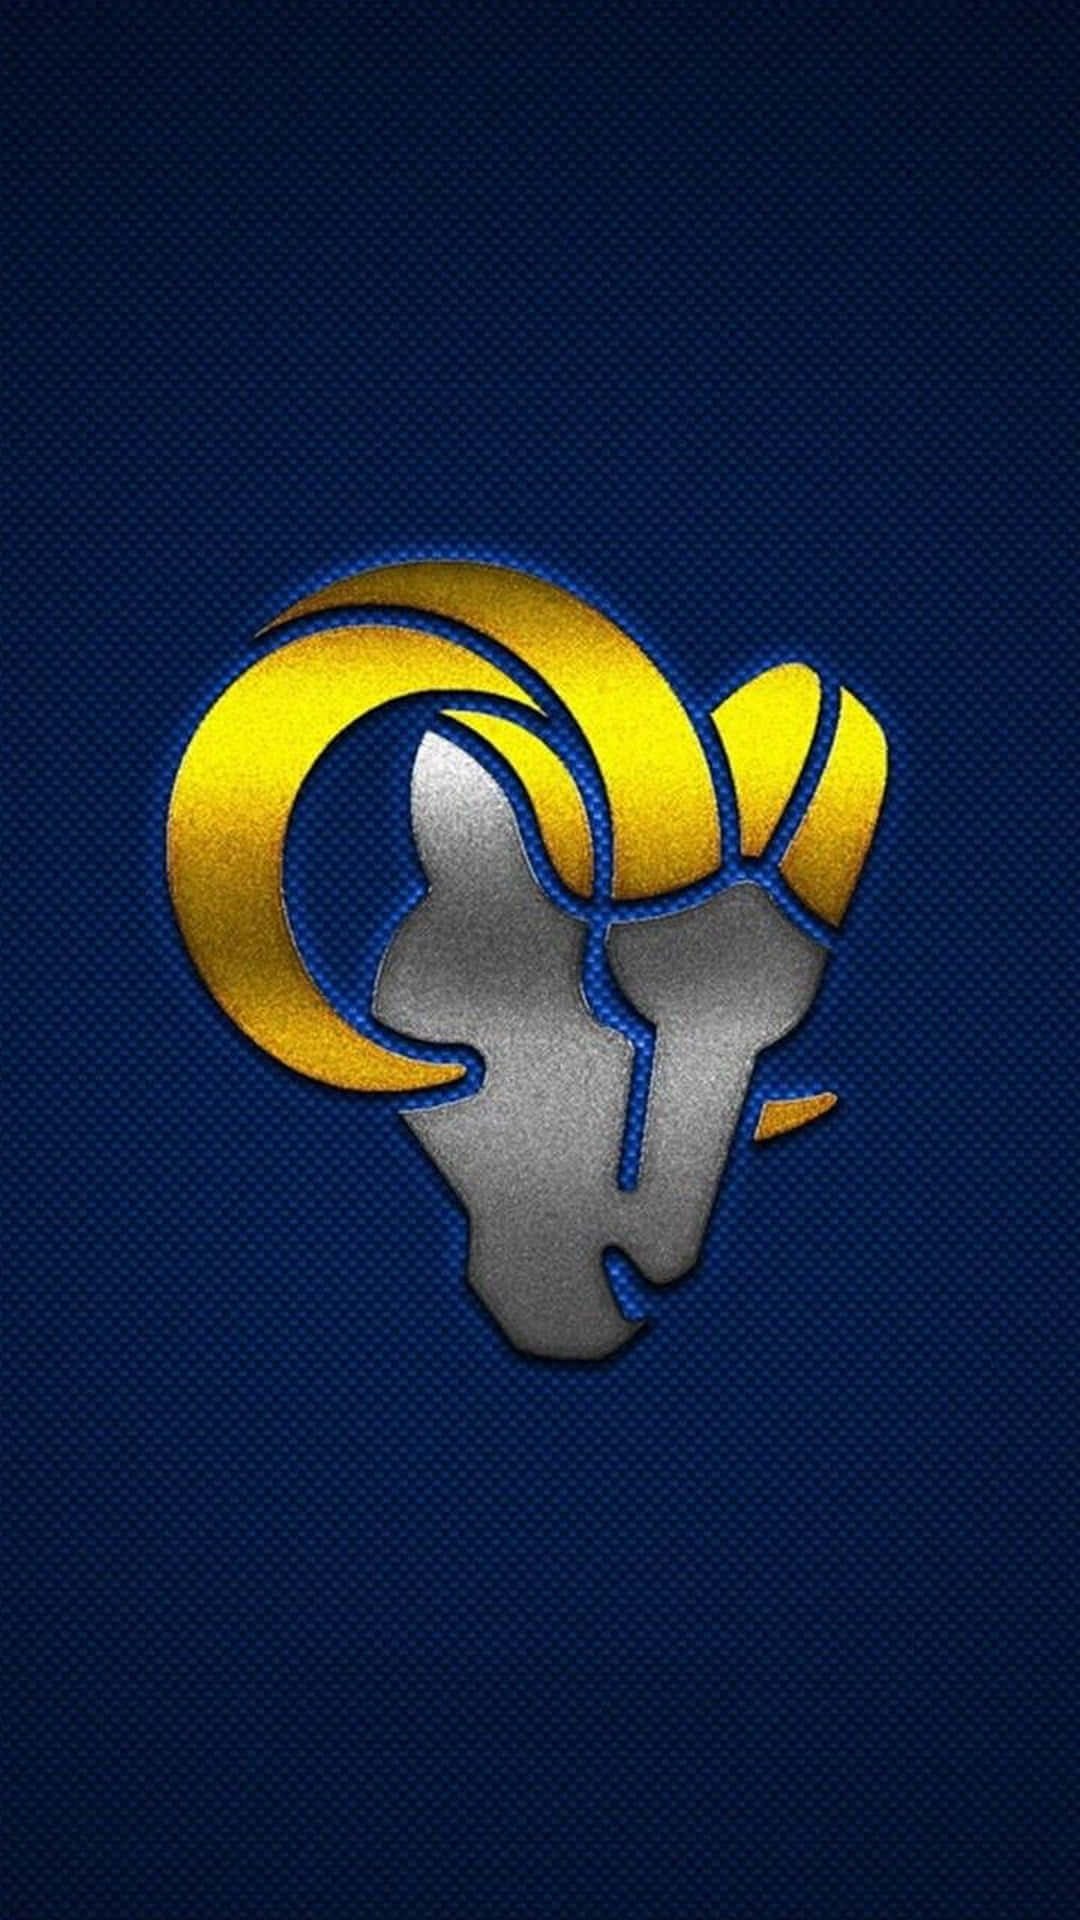 Rams Iphone Wallpaper